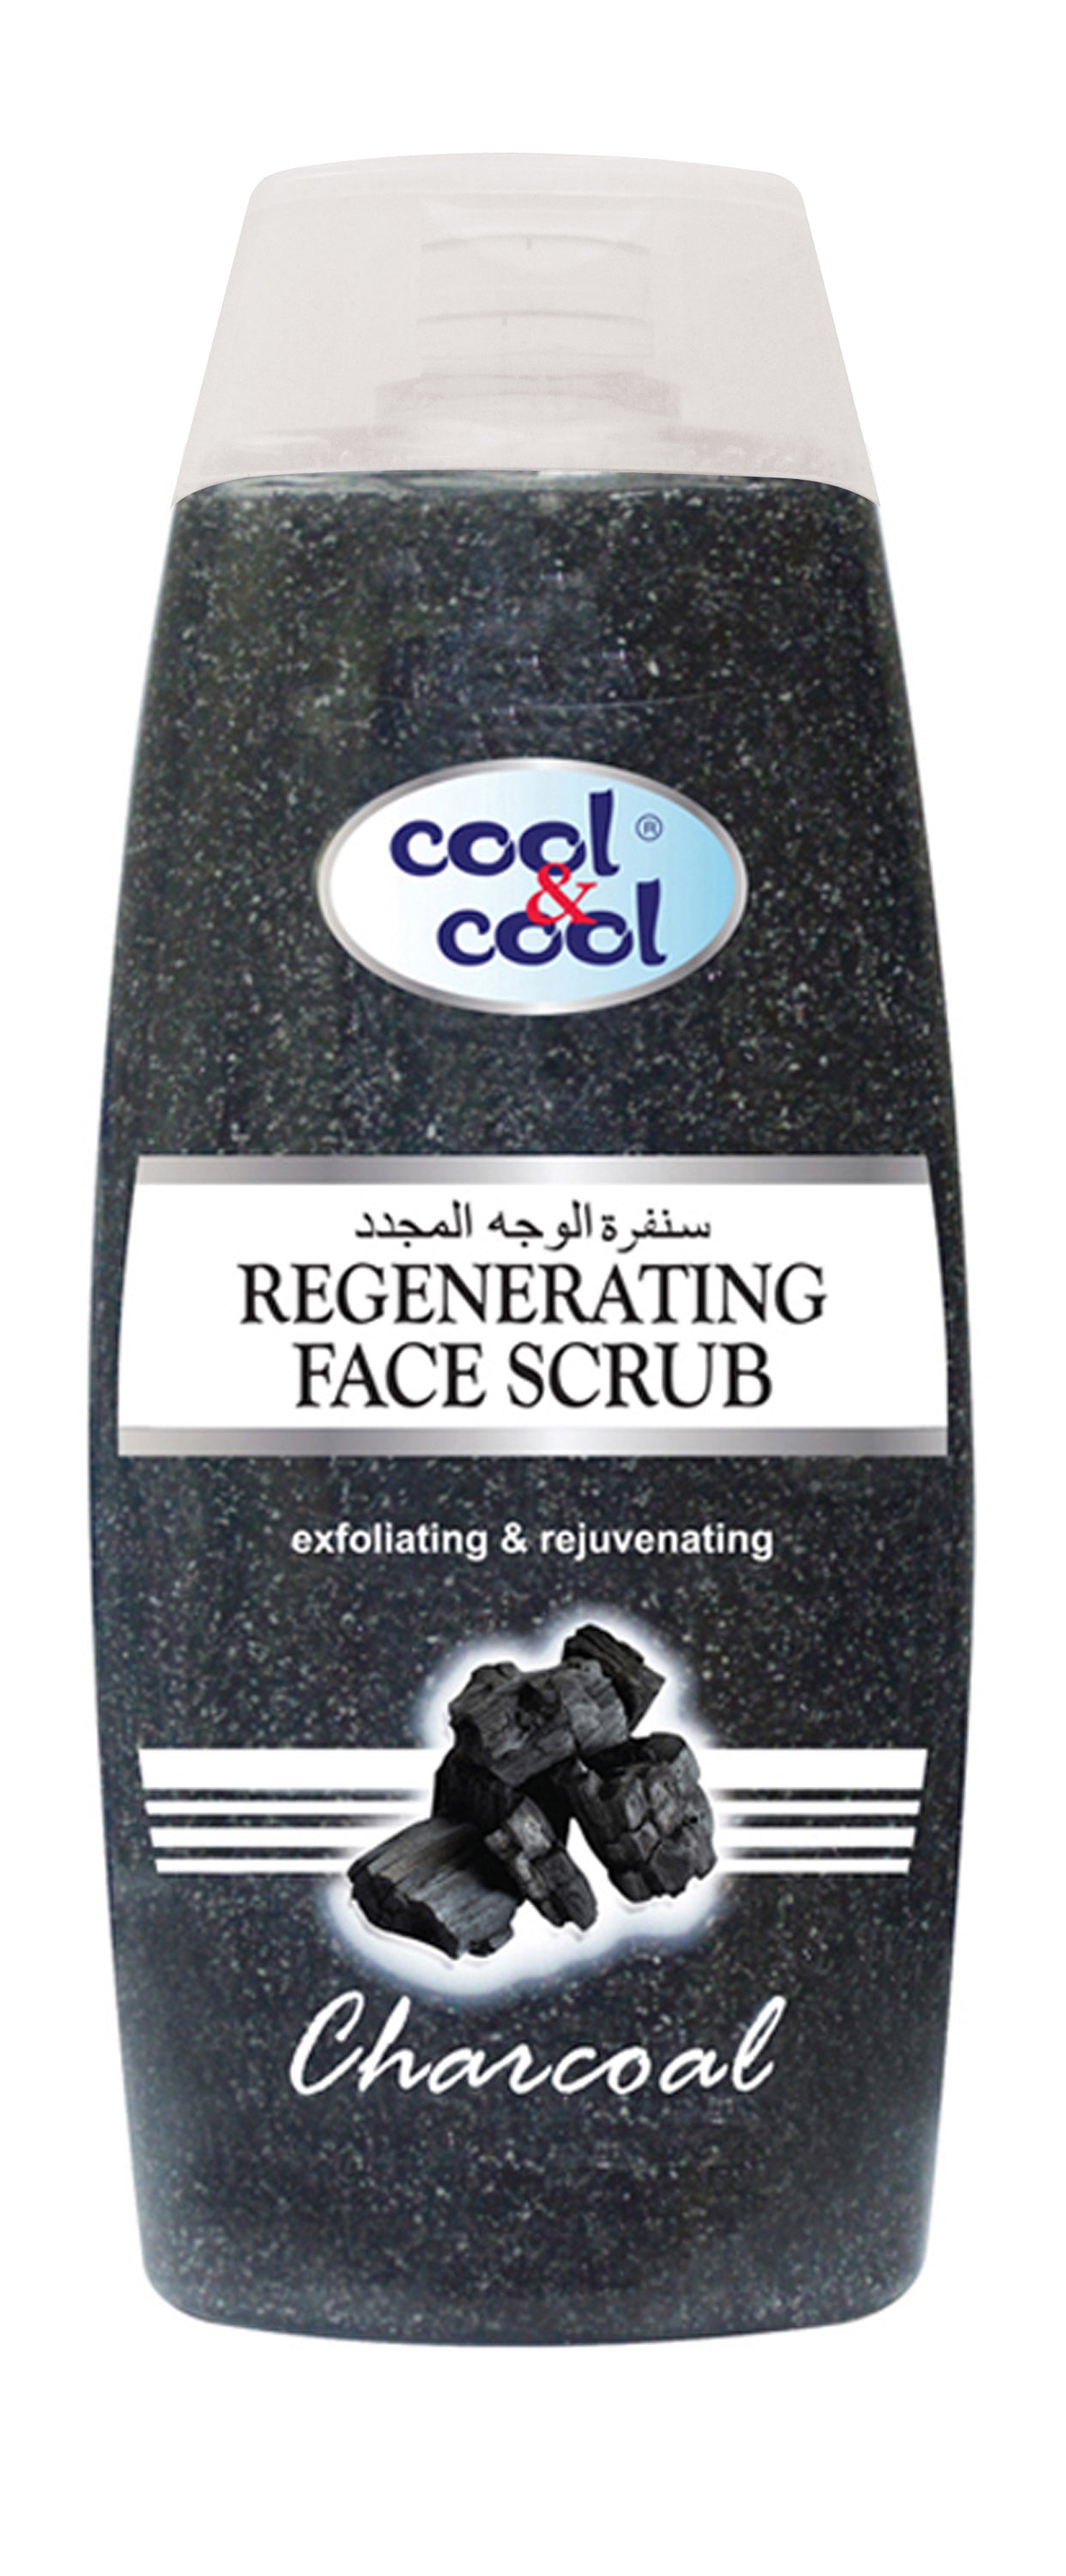 Cool & cool Regenerating Face Scrub 200Ml